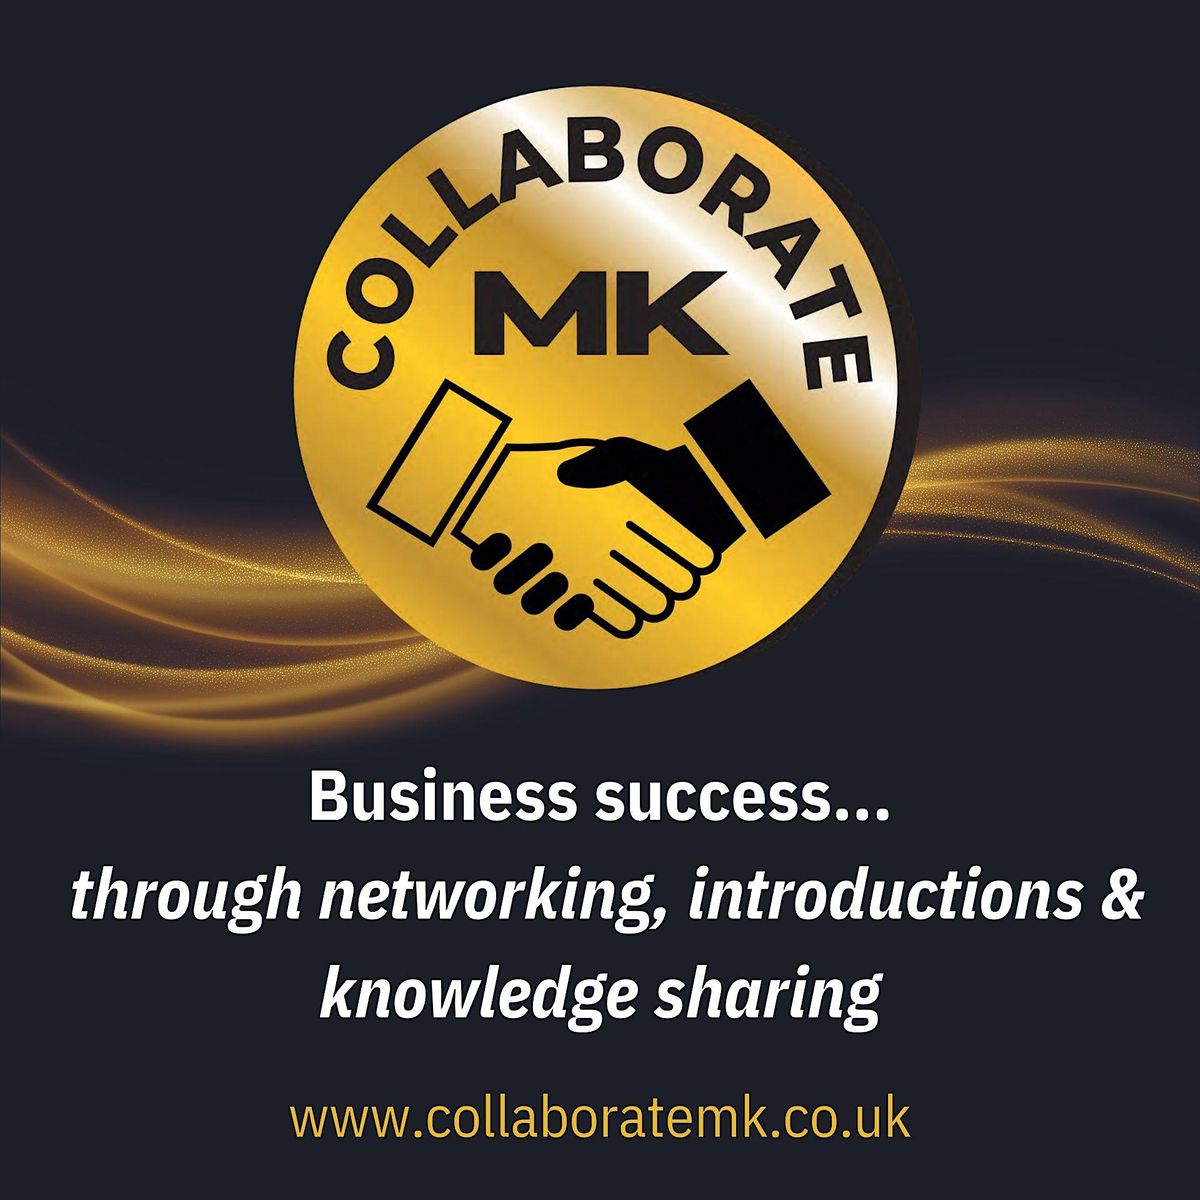 Collaborate MK - Gold Membership Workshop - Whittlebury Park